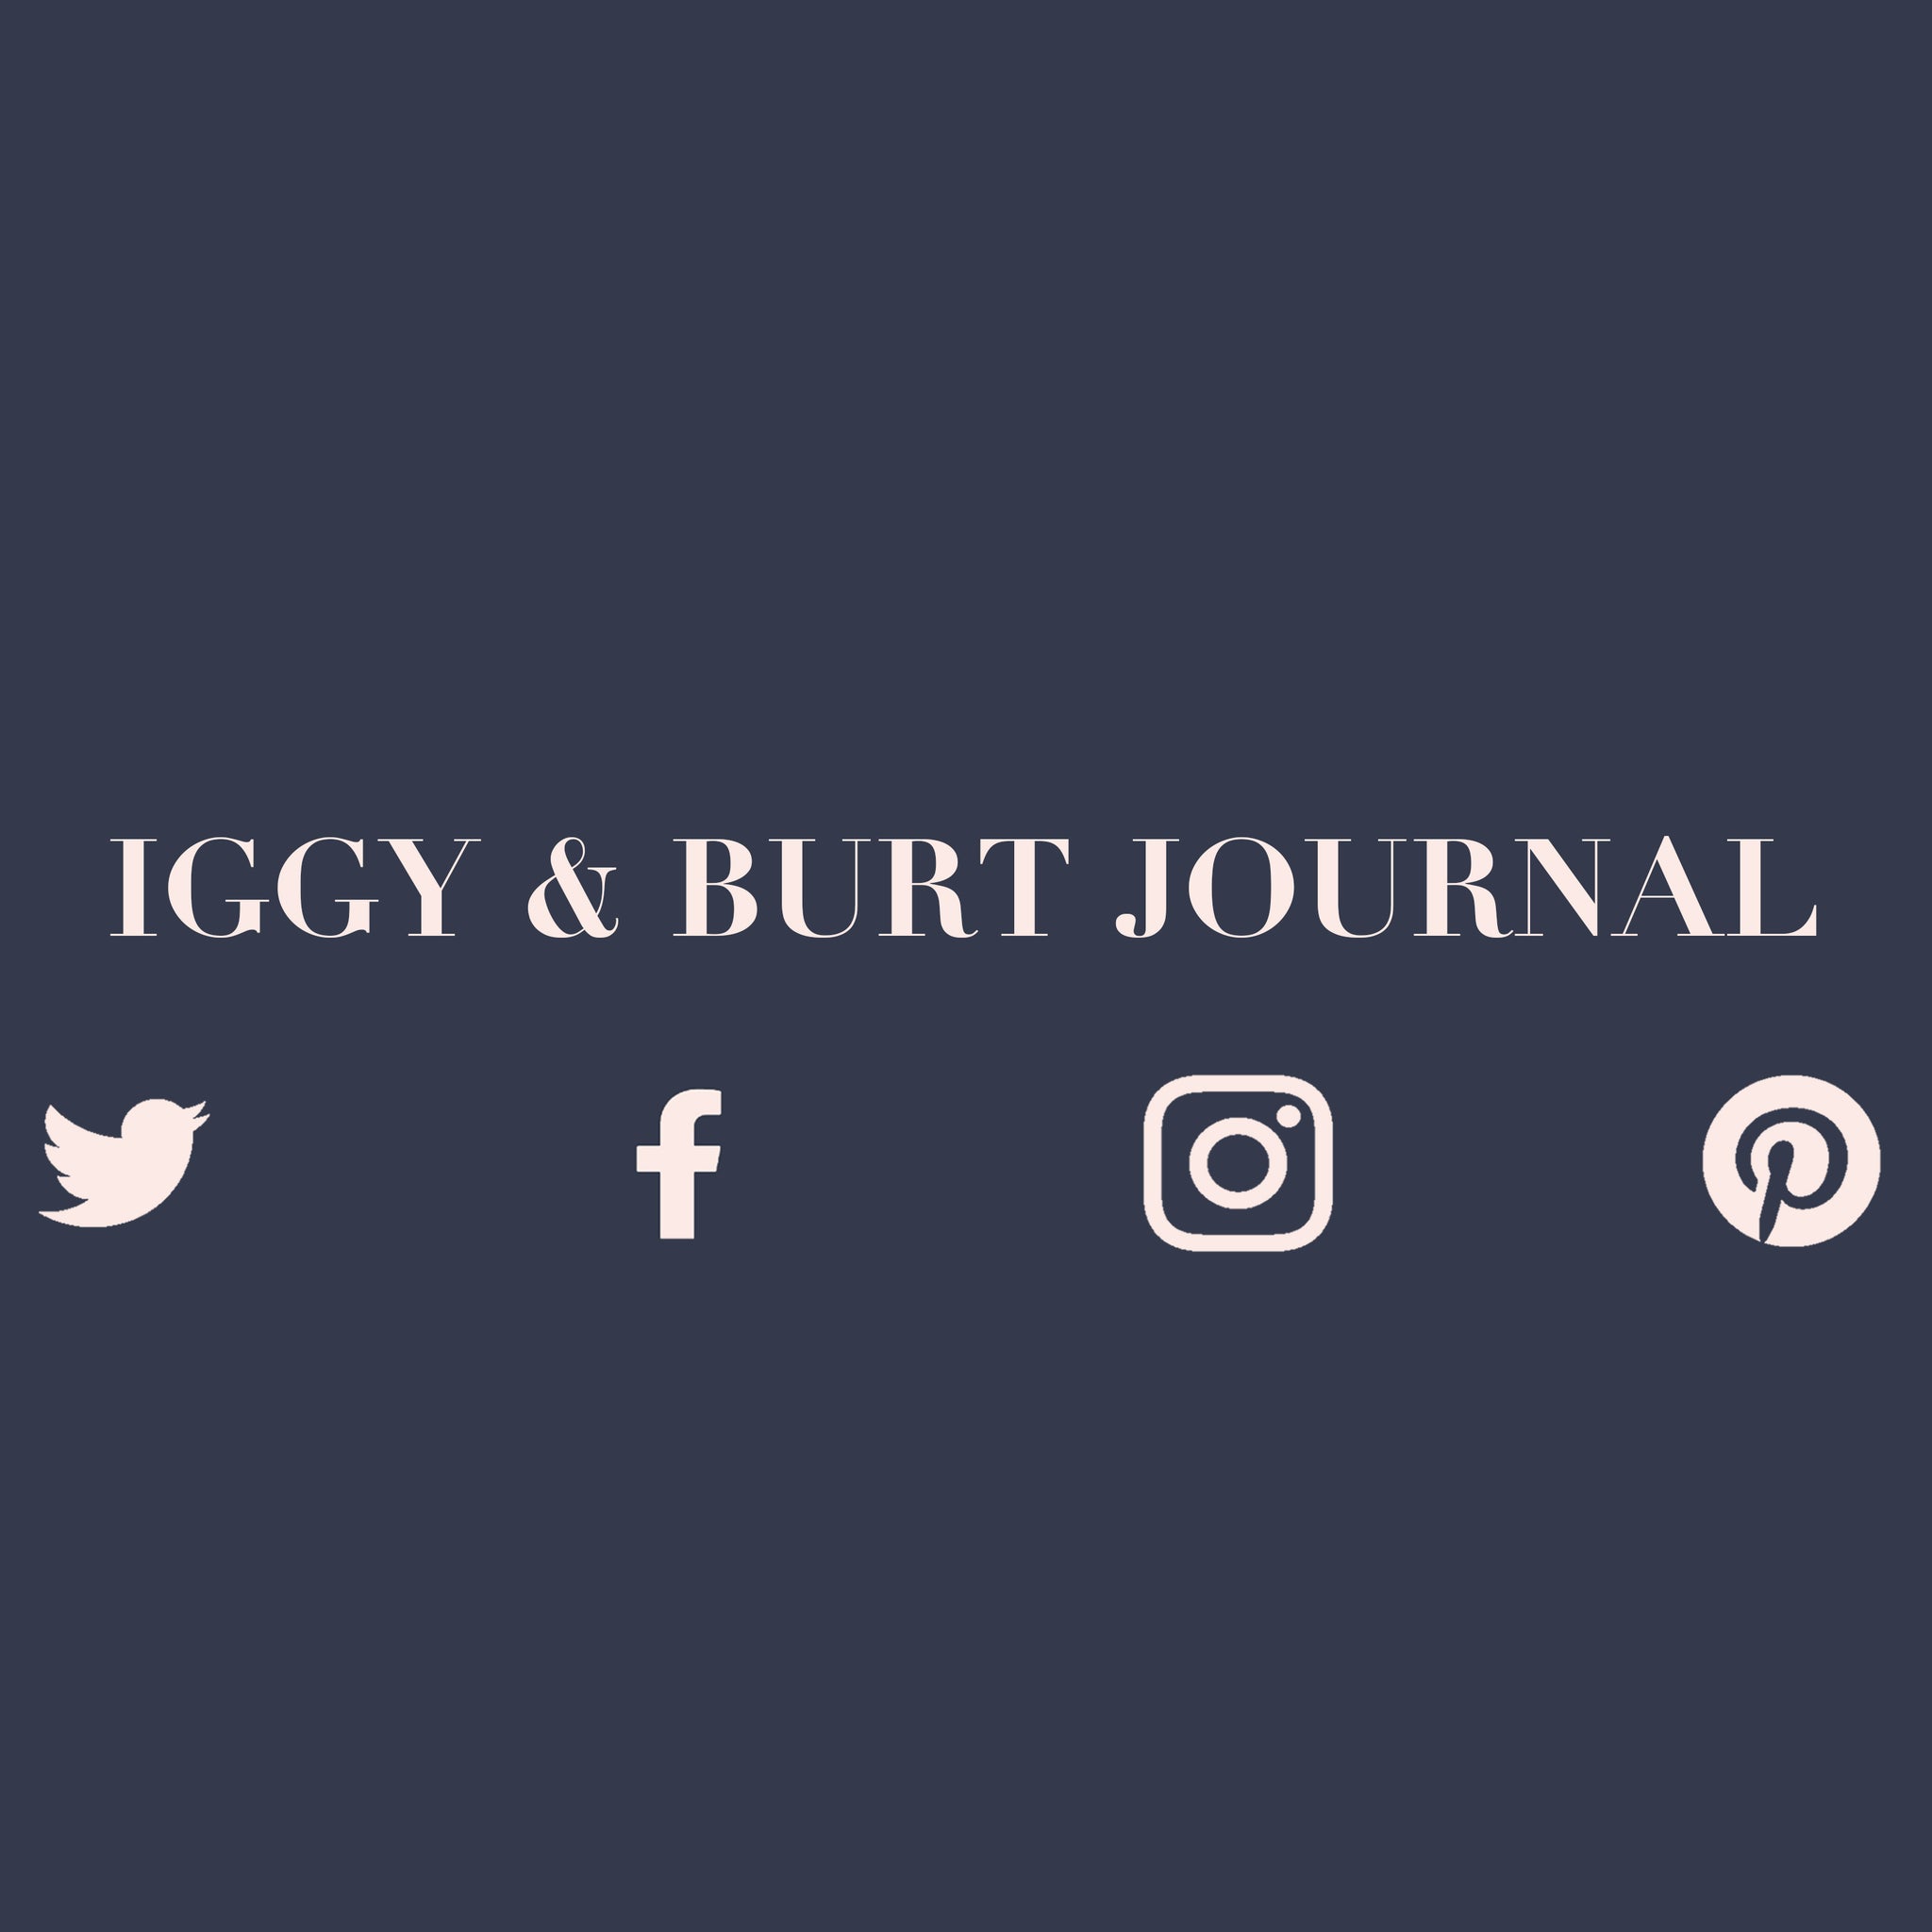 Welcome to the Iggy & Burt Journal